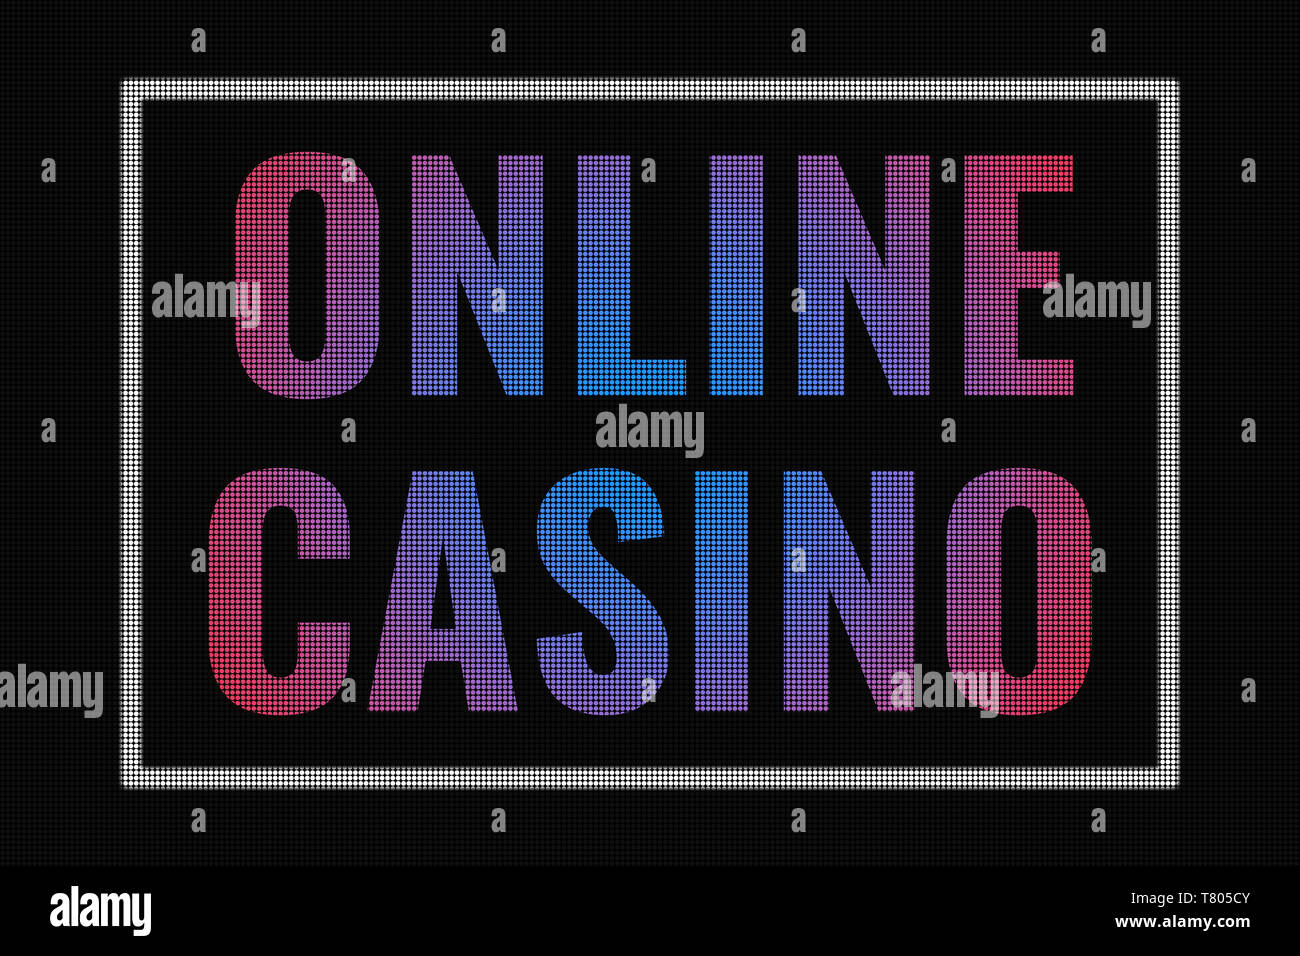 Онлайн тв казино азов город казино